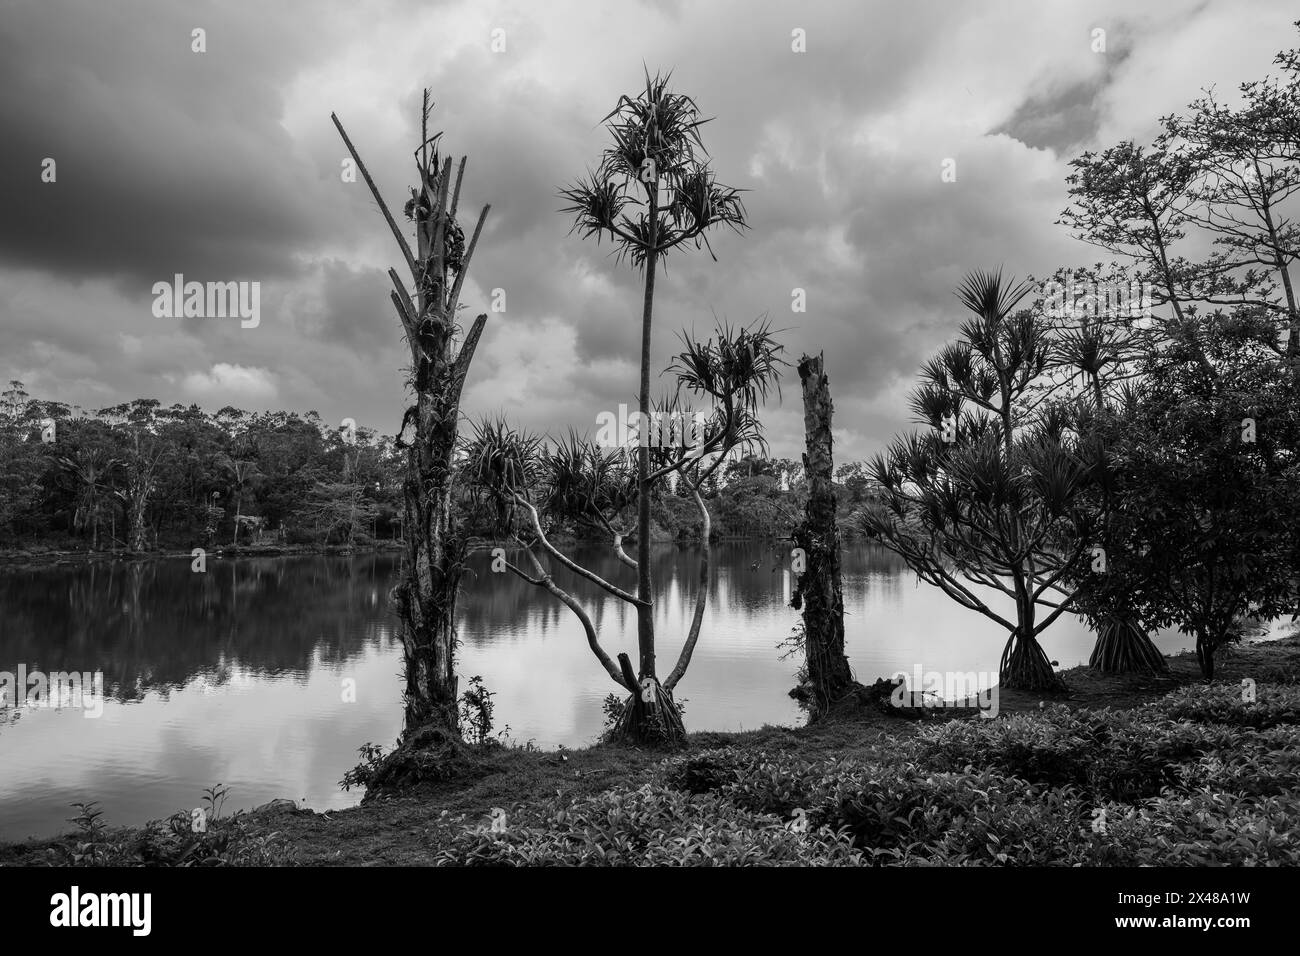 Landscape with Lake and Bizarre Trees in Bois Cheri Tea Plantation, Mauritius in Monochrome Black and White Stock Photo